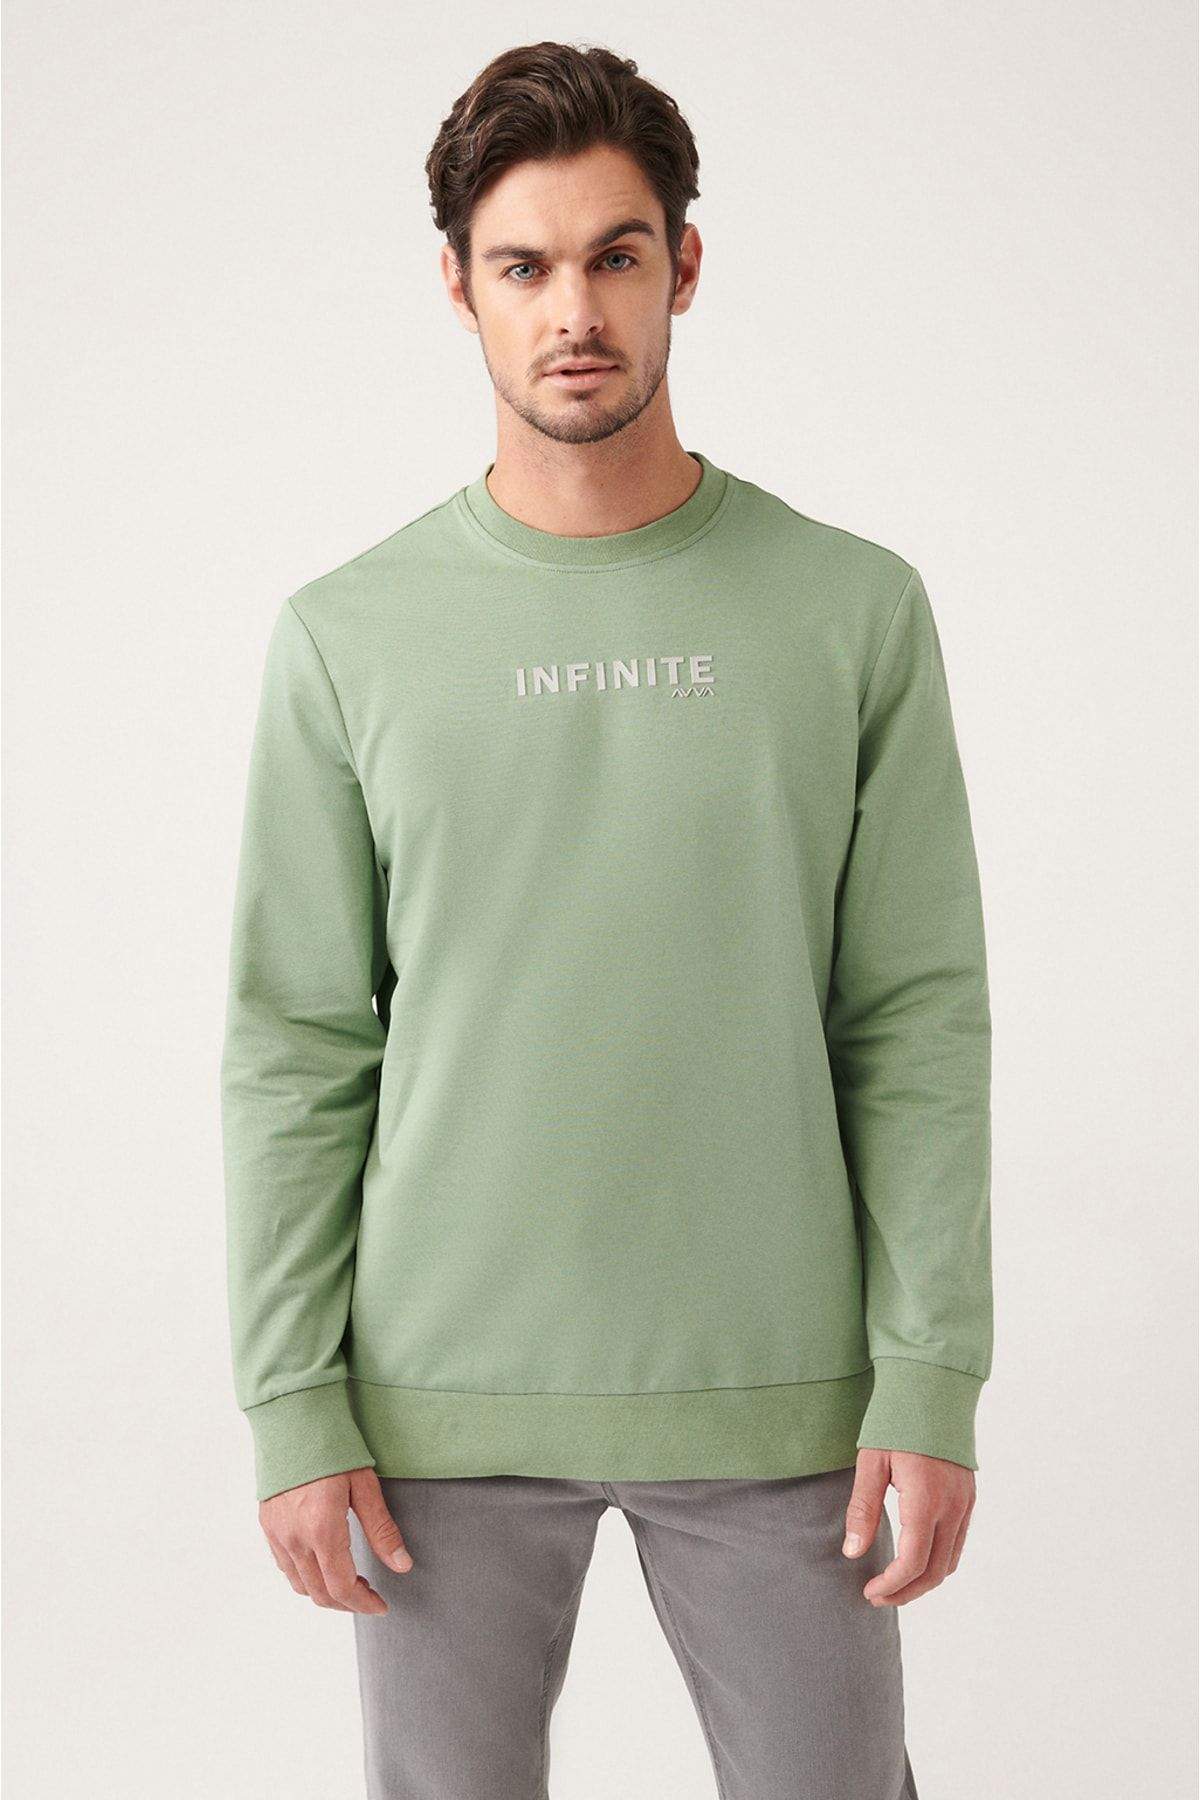 aqua-green-crew-neck-printed-cotton-regular-fit-sweatshirt